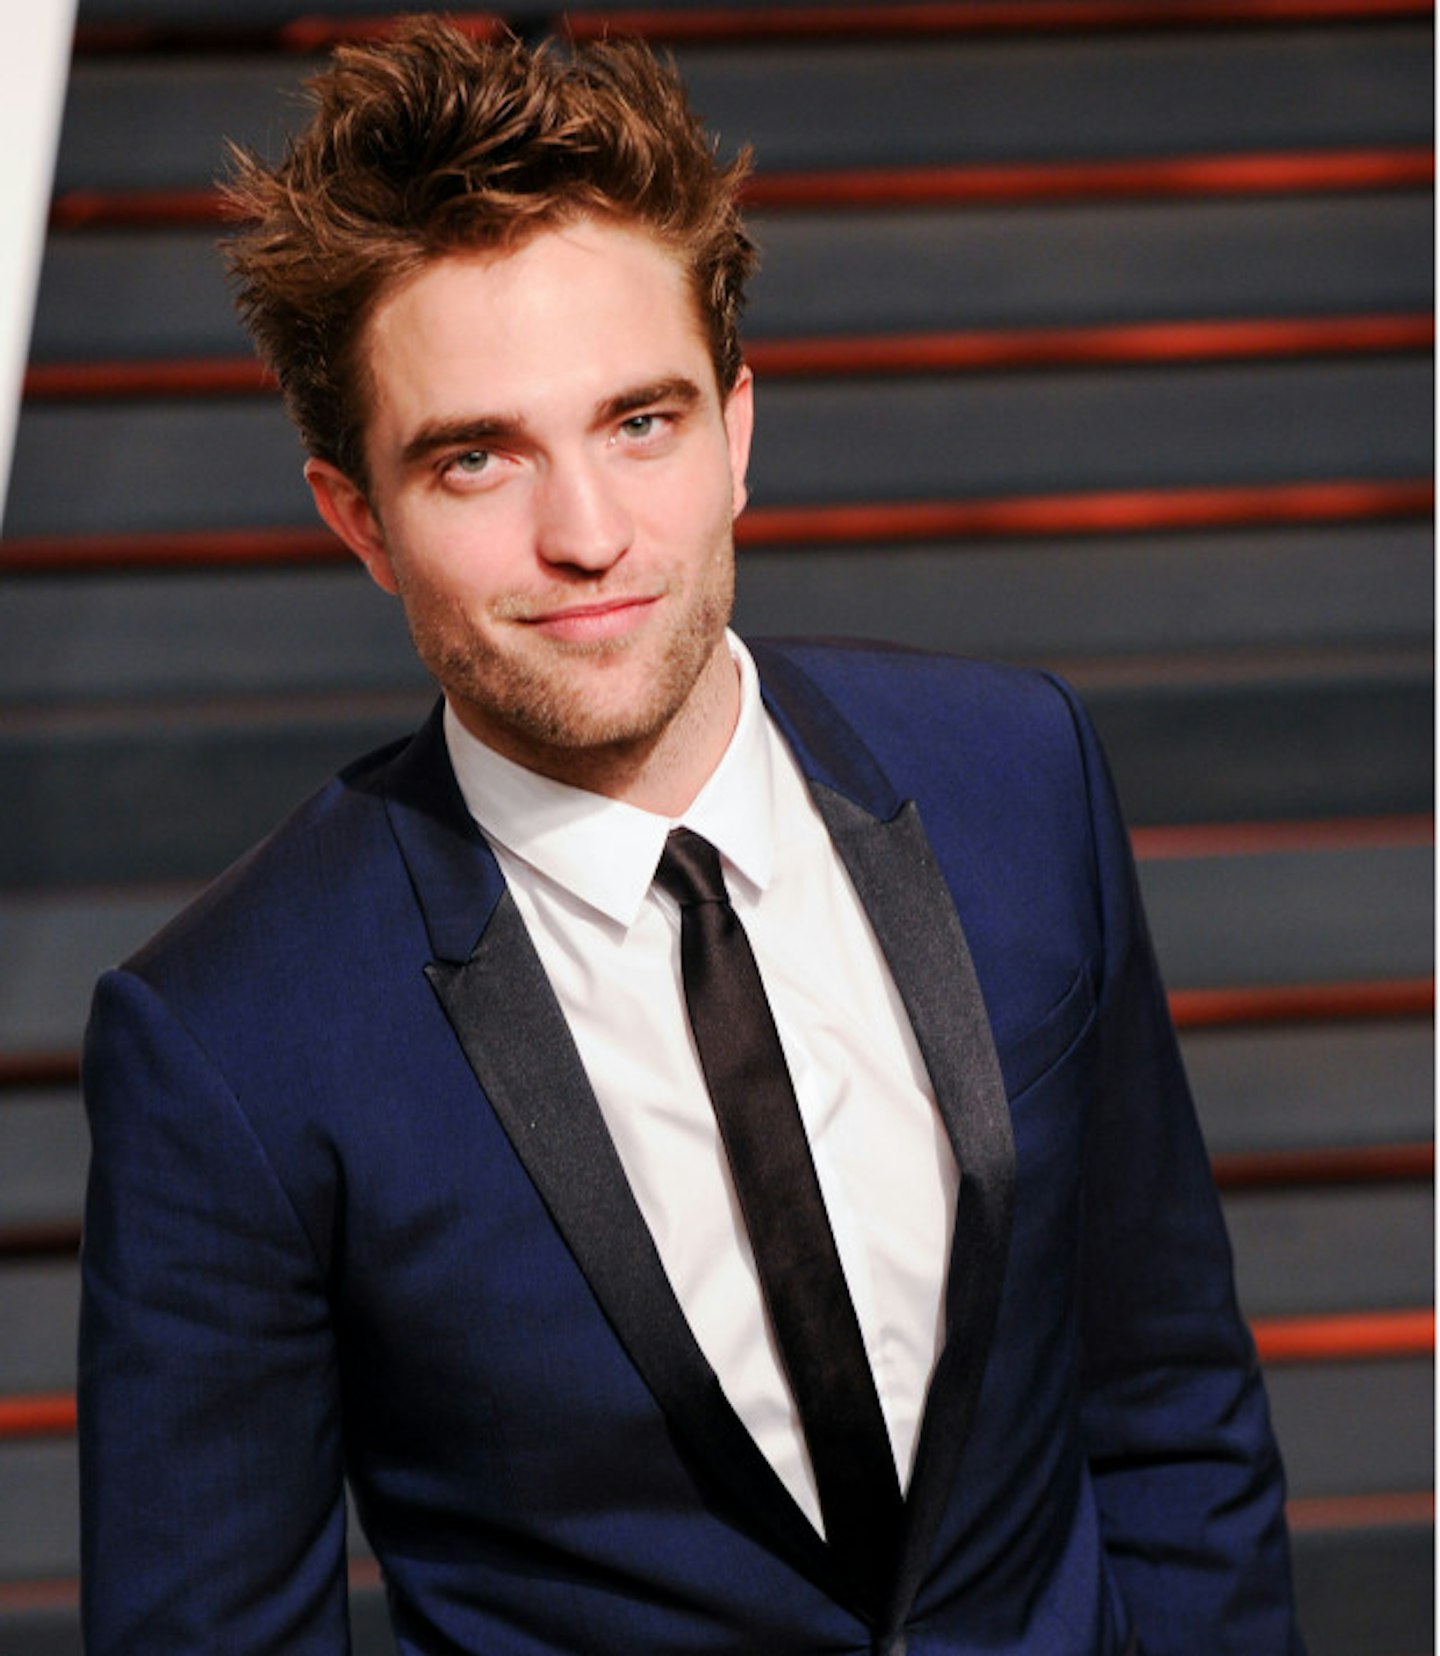 34. Robert Pattinson